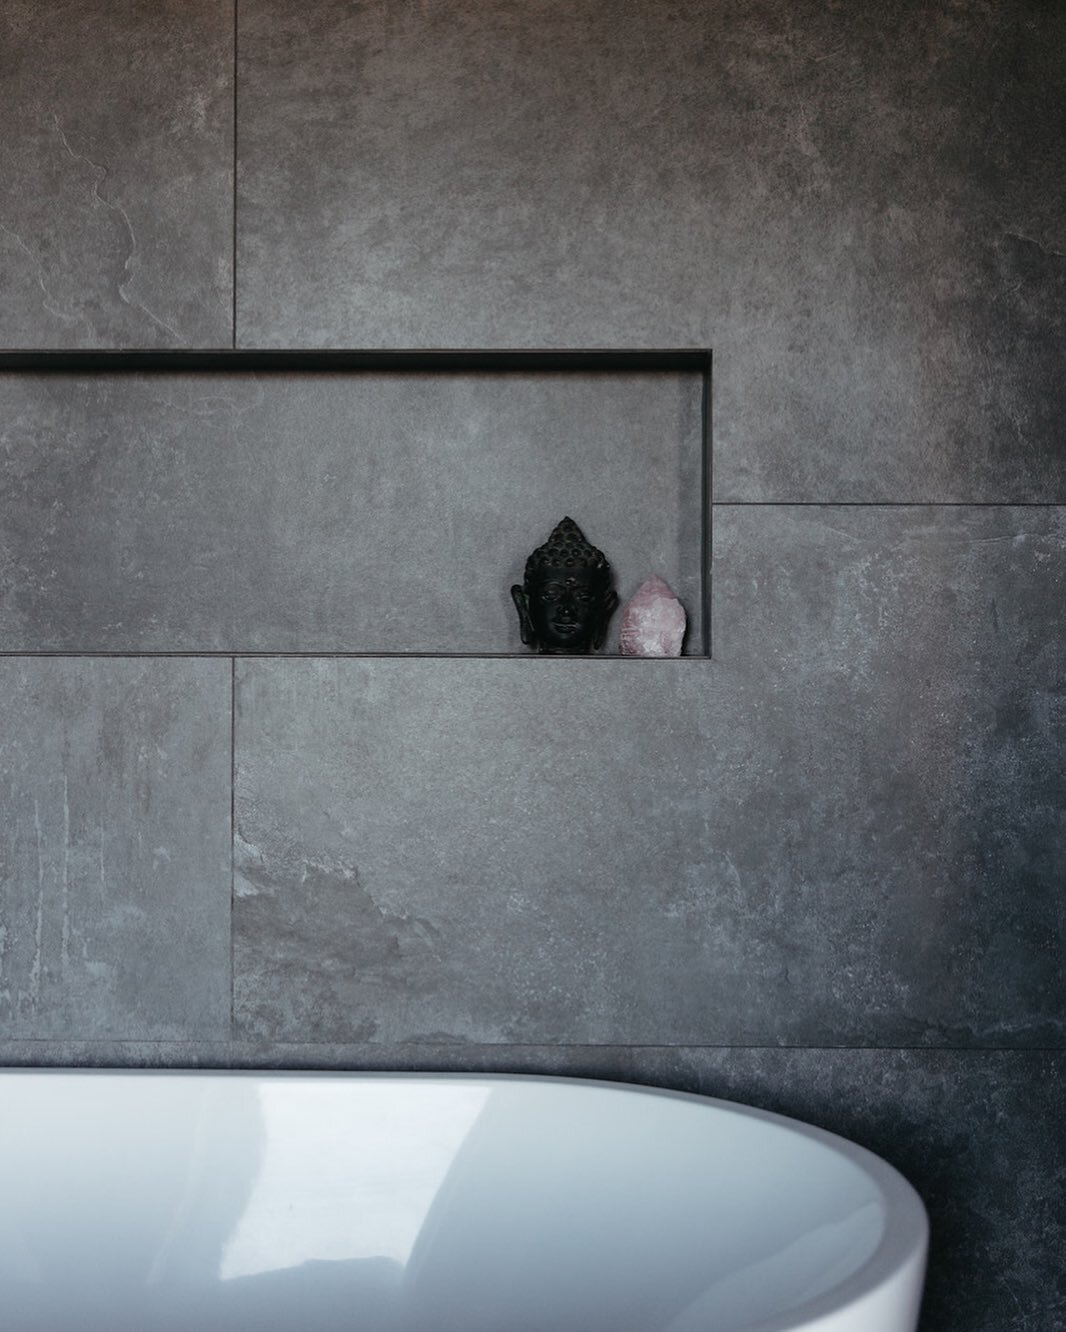 Soak it up. 😎

Photo credit @jessporterphotography 

#bath #bathtub #ironbarkranchco #centralcoastnsw #lovecentralcoast #darkinjungcountry #sydney #newcastle #retreat #stays #vacation #family #selfcare #relax #unwind #coldtherapy #minimal #design #f